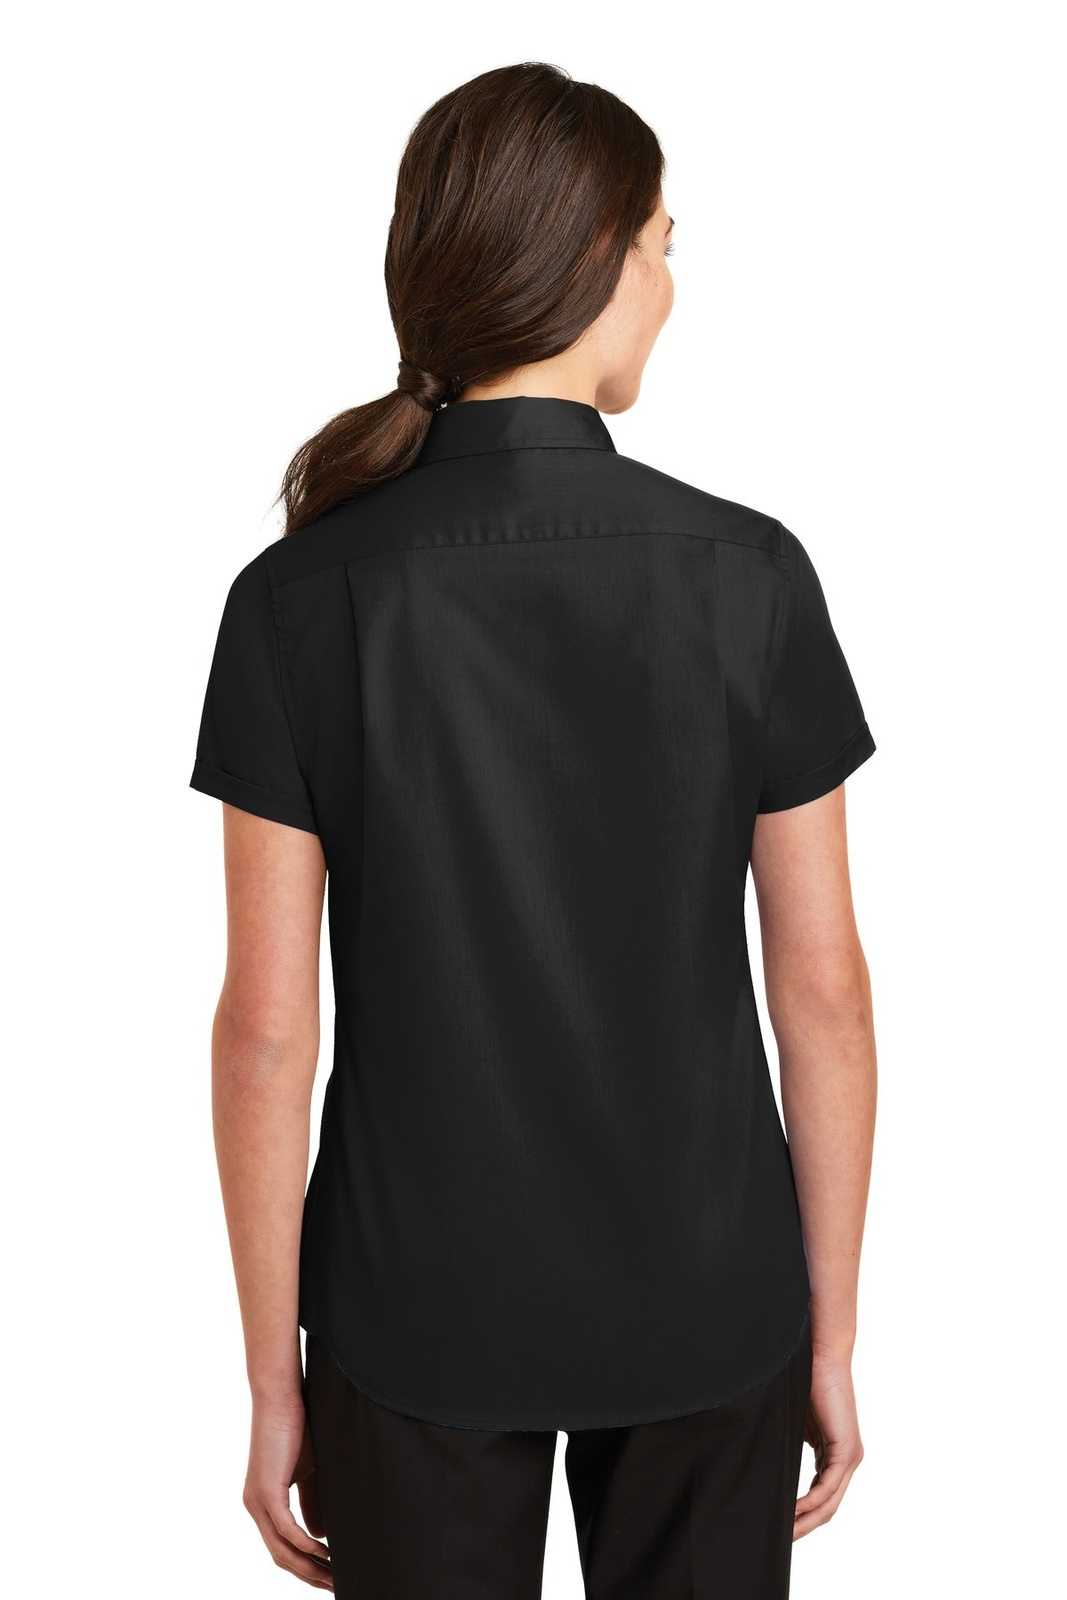 Port Authority L664 Ladies Short Sleeve Superpro Twill Shirt - Black - HIT a Double - 2